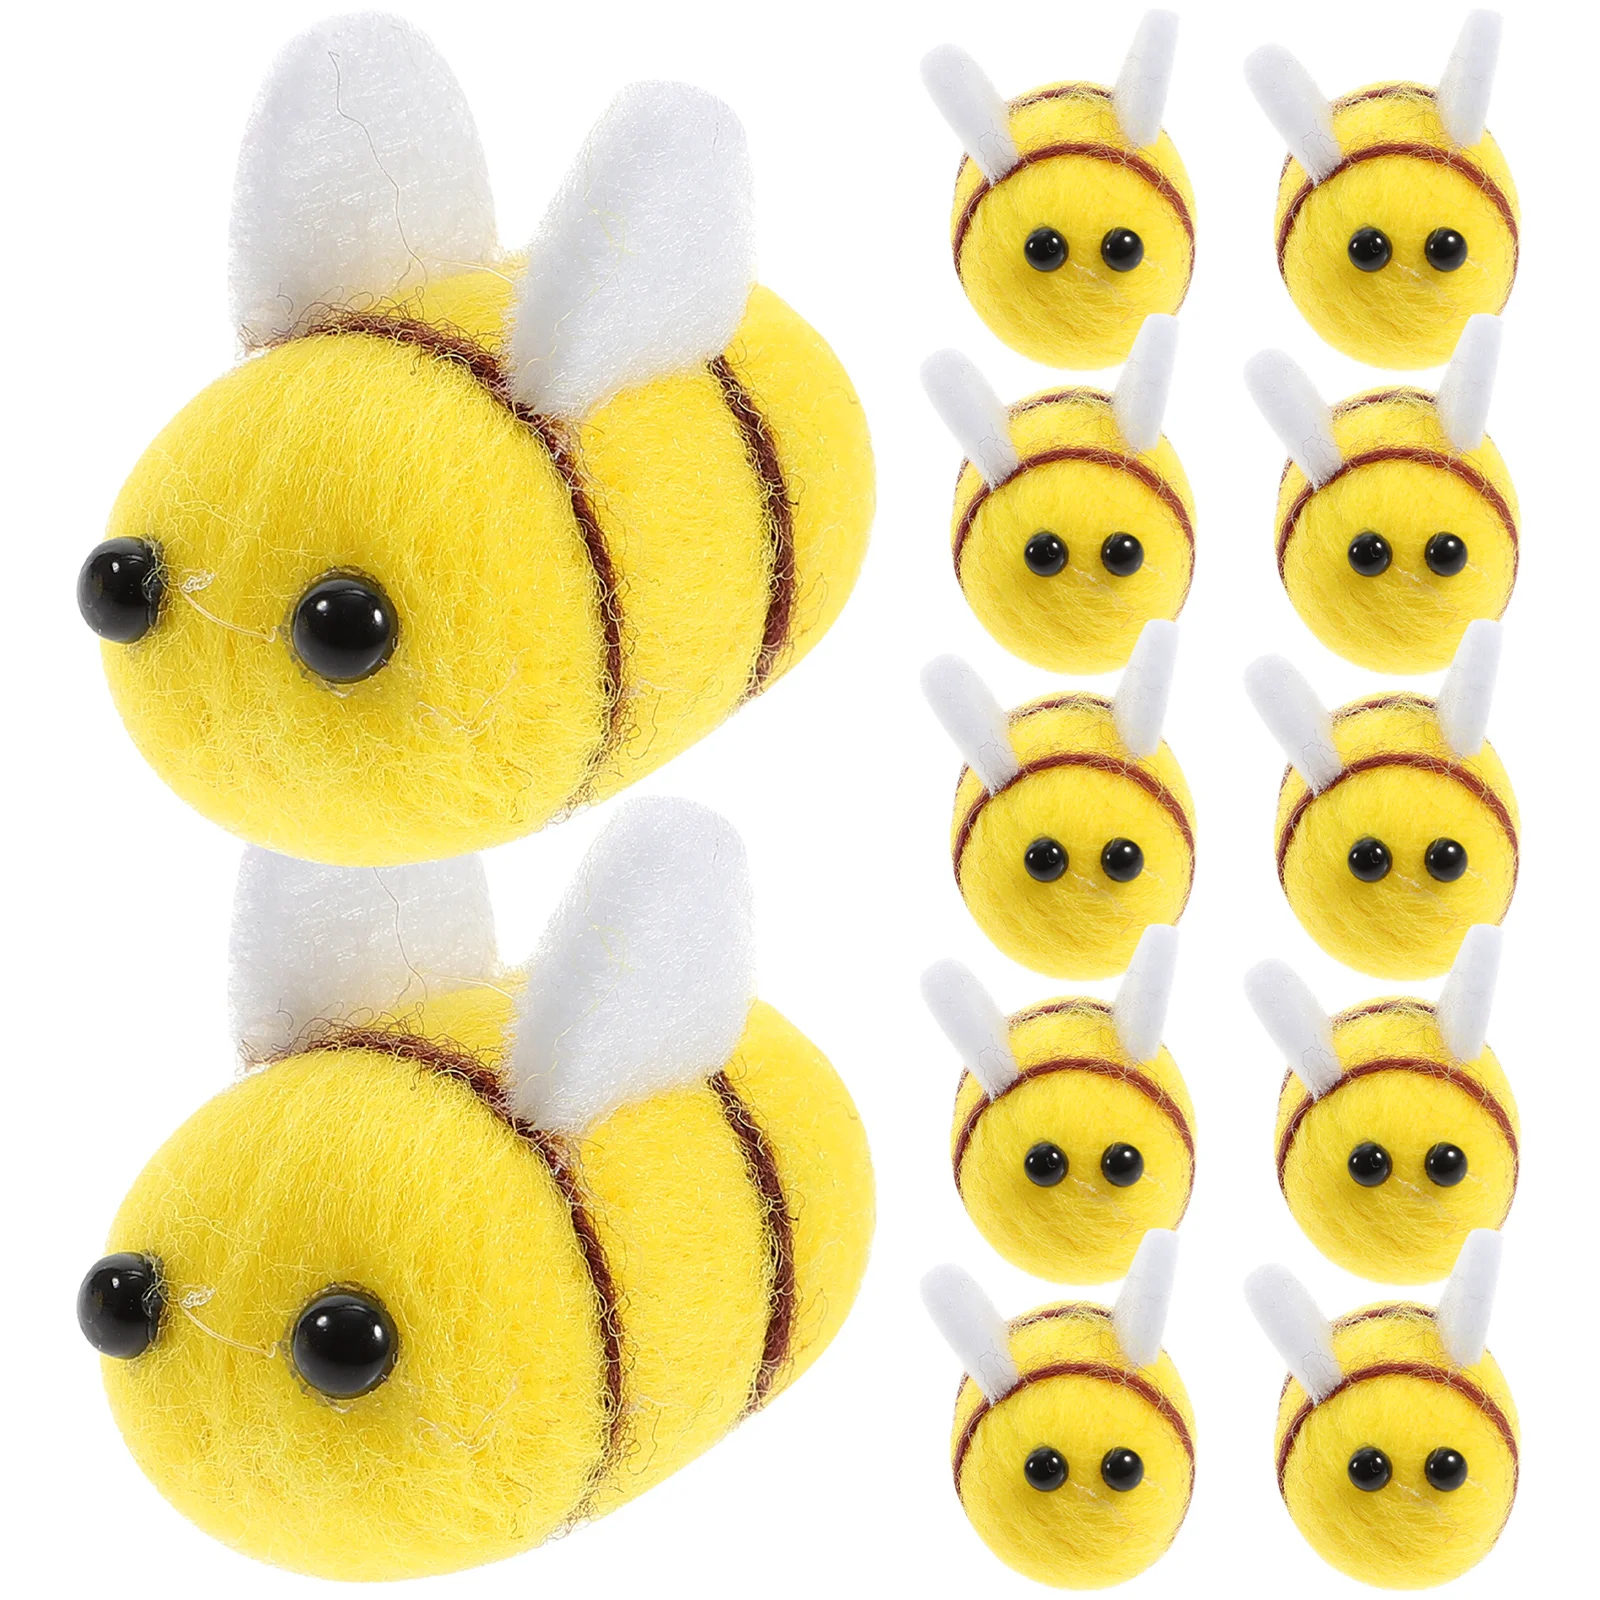 

12PCS Crafts Bumblebee Balls DIY Cartoon Insect Felt Charm Pendant Shower Tent Decoration Supplies